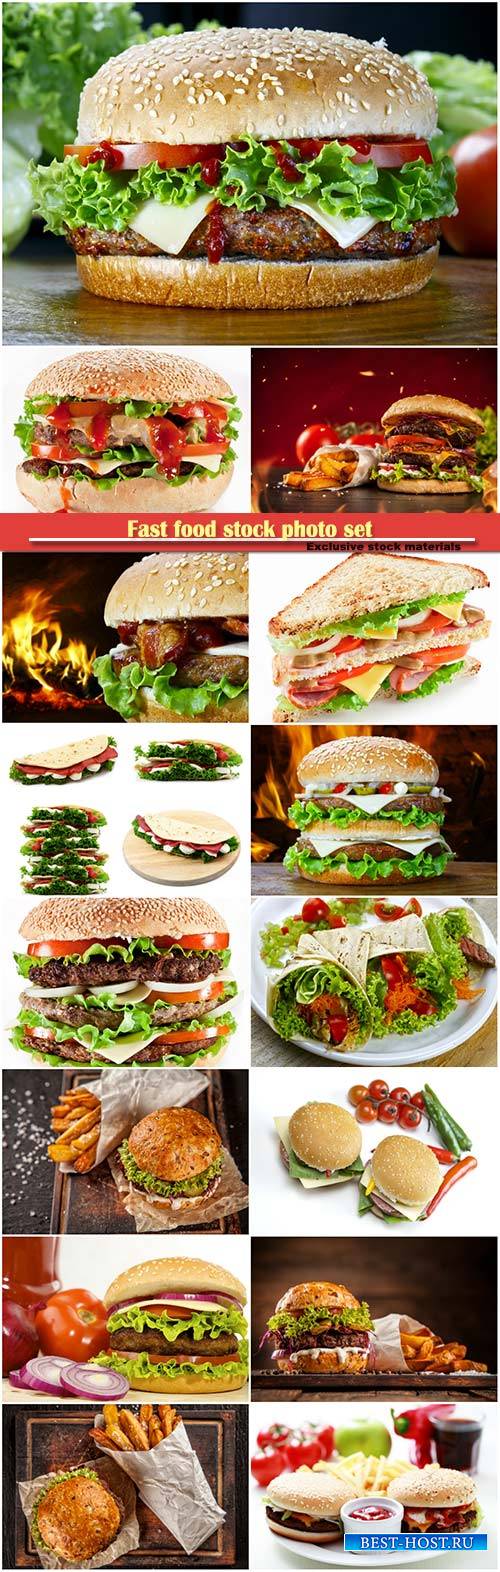 Fast food stock photo set